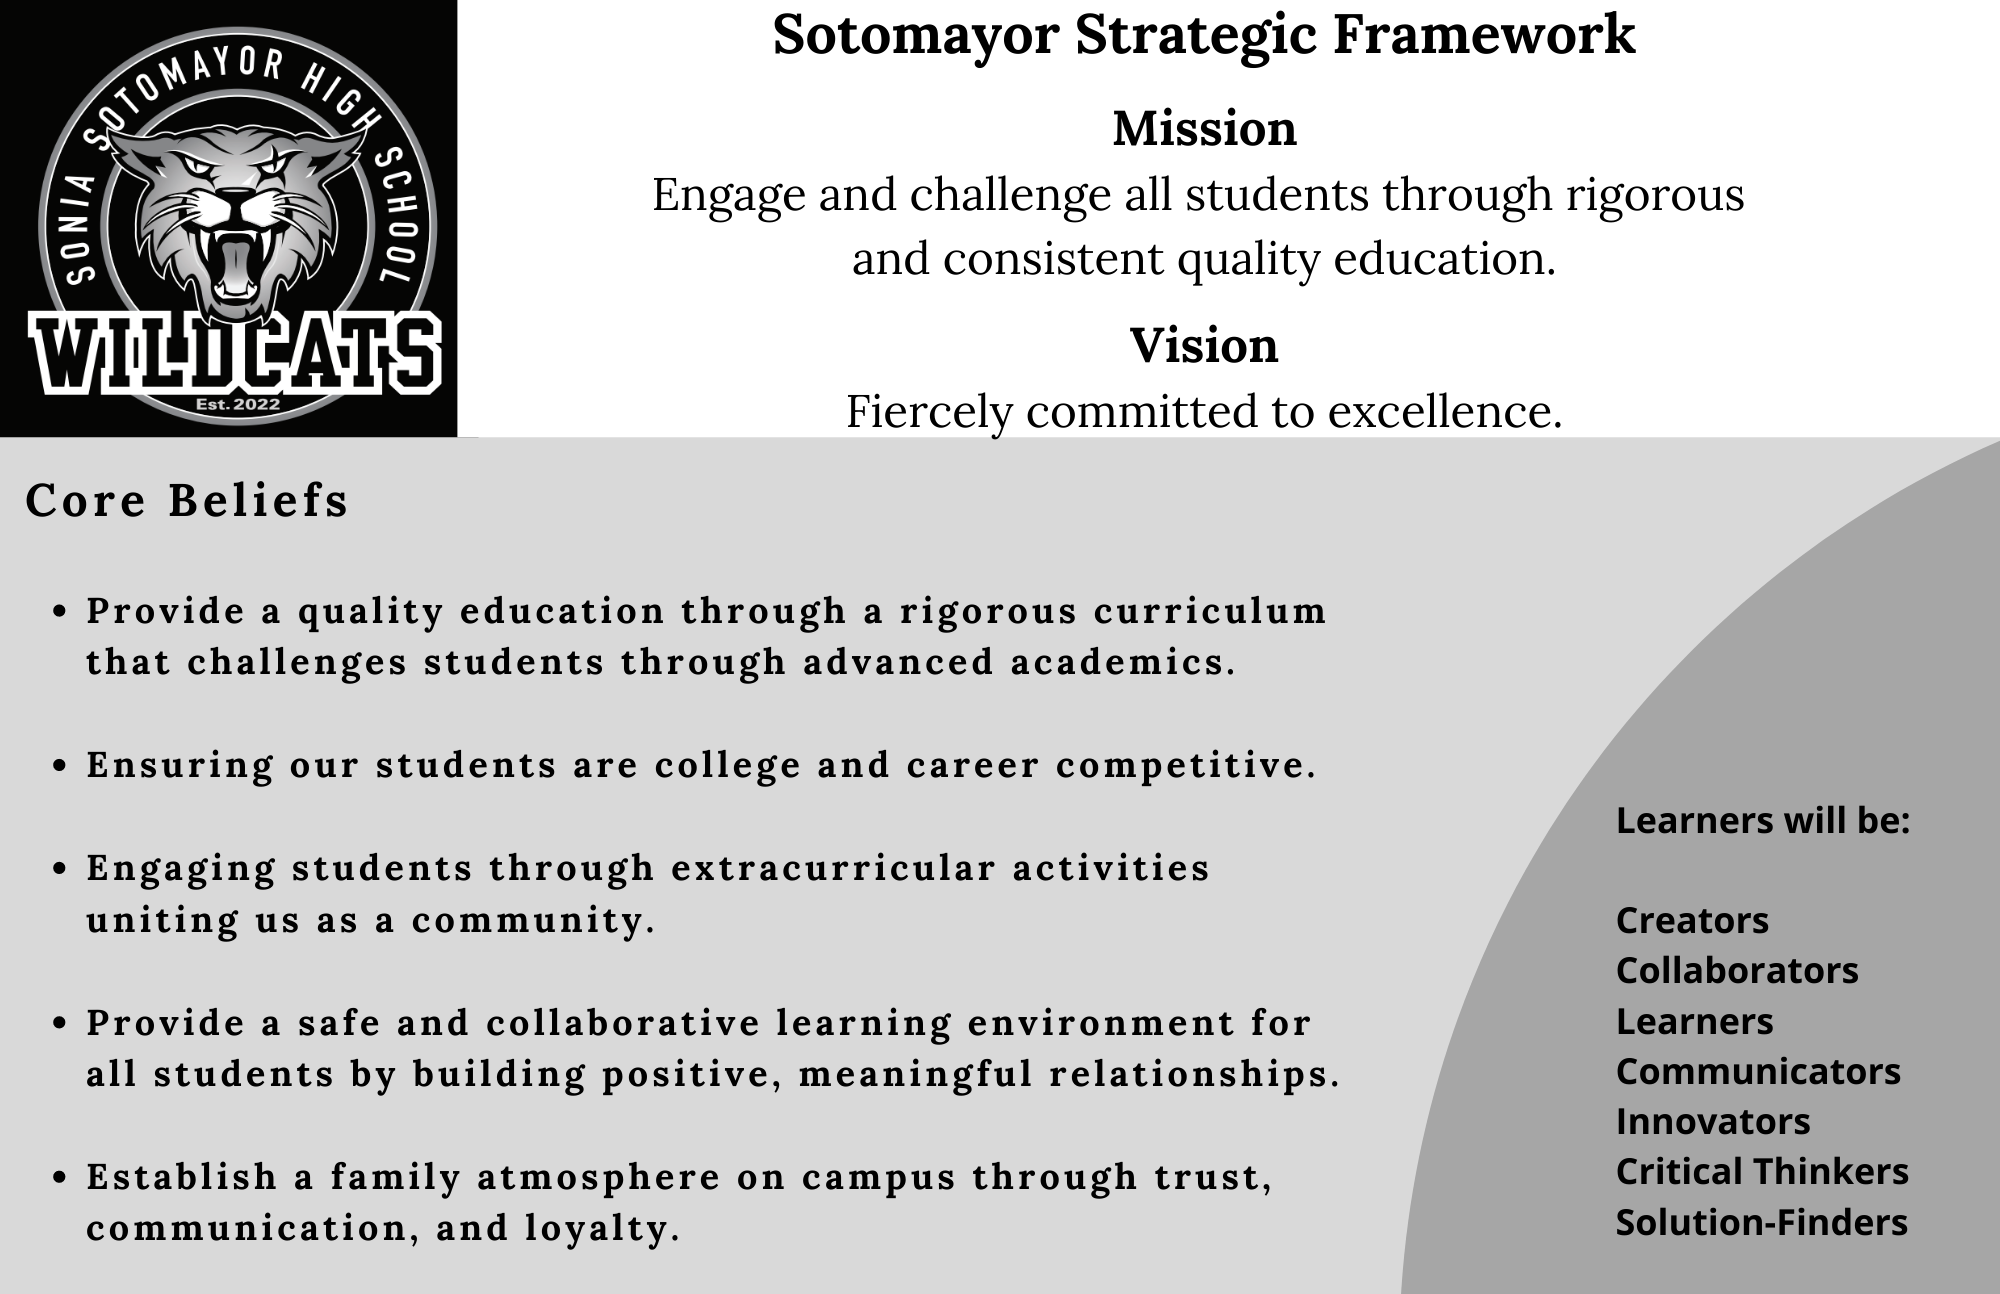 Sotomayor Strategic Framework: Description of the schools mission and core beliefs 